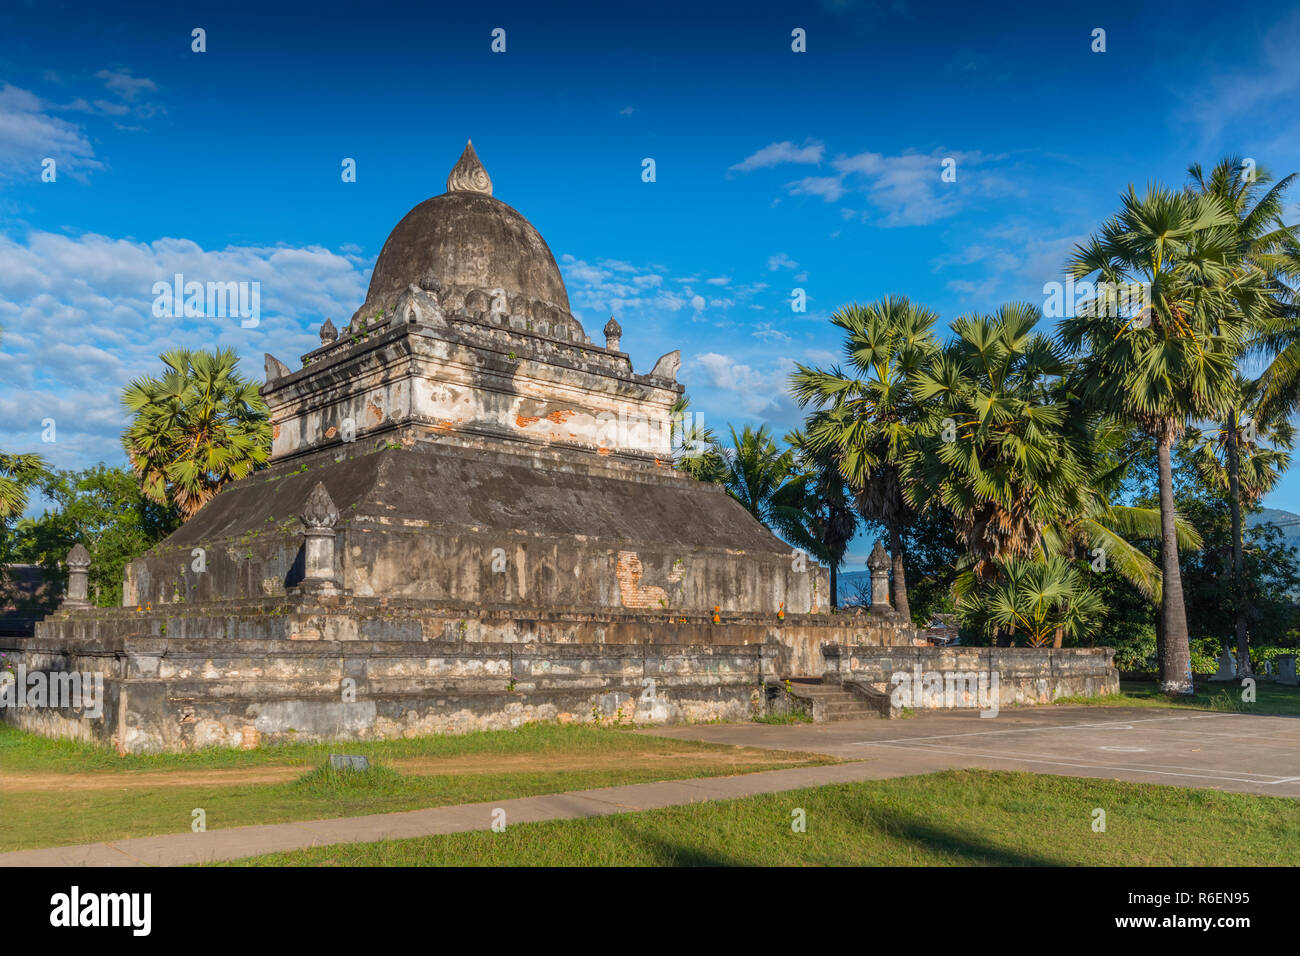 Ansicht Der, dass Makmo Stupa, auch als die Wassermelone Stupa im Wat Wisunalat Luang Prabang Laos bekannt Stockfoto